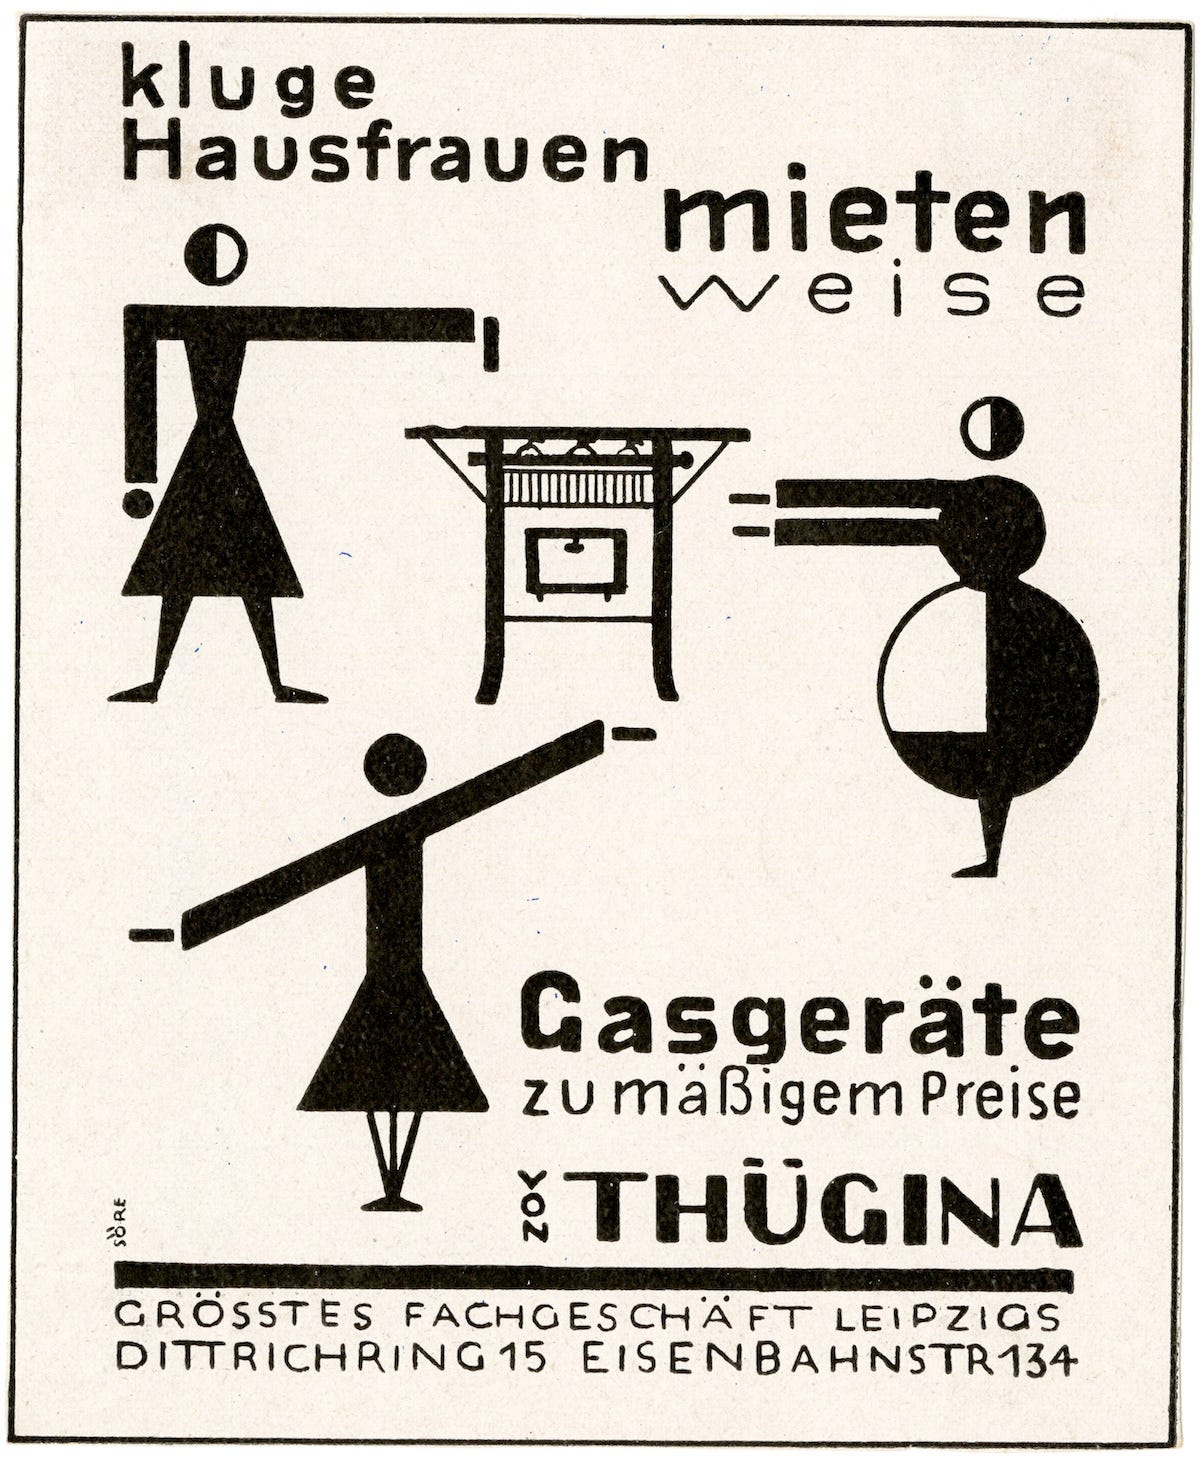 Celebrating Sore Popitz The Bauhaus Only Known Woman Graphic Designer By Aiga Eye On Design Aiga Eye On Design Medium